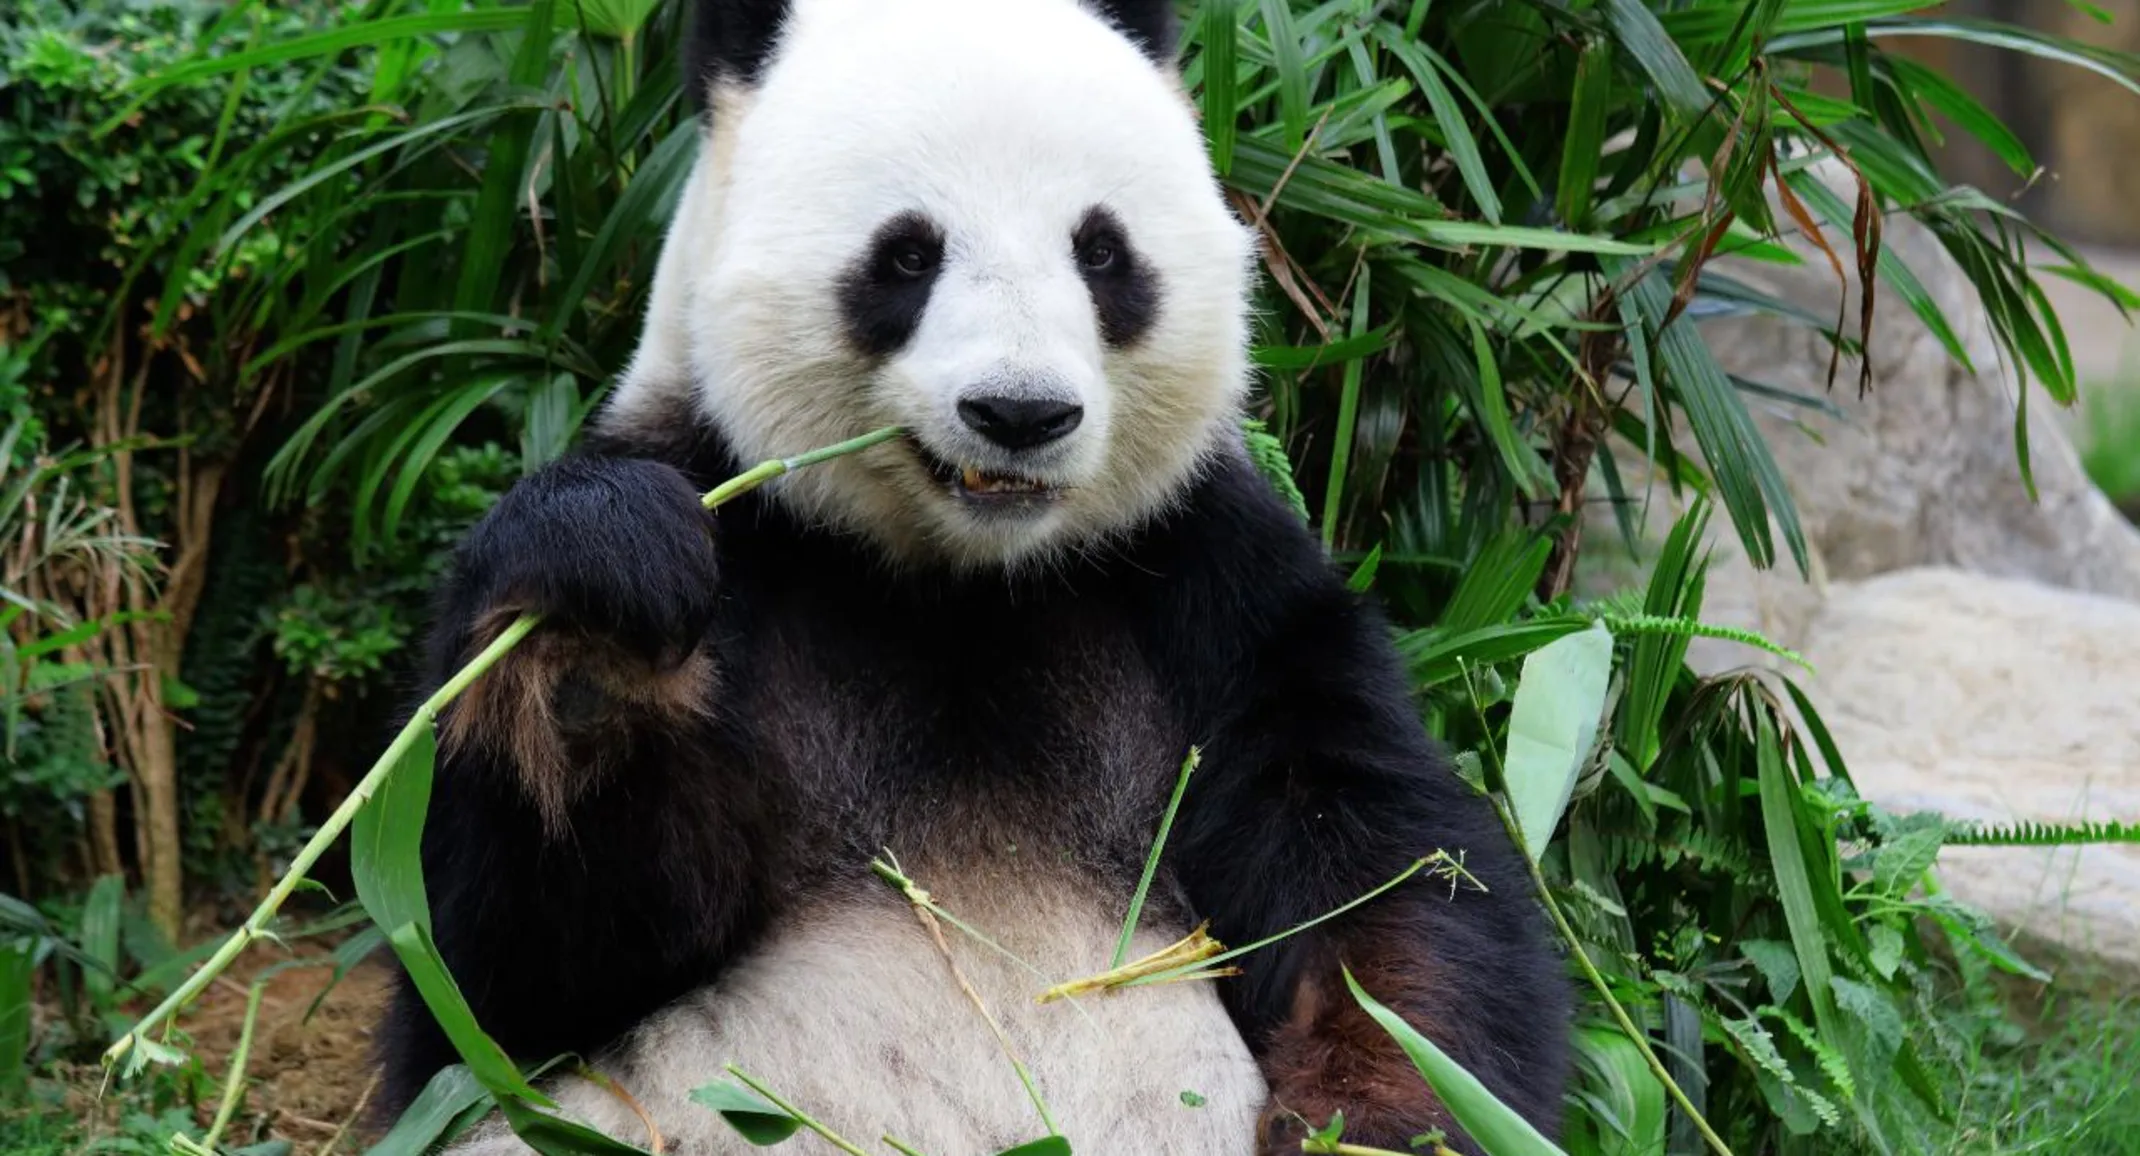 Panda eating leaves.